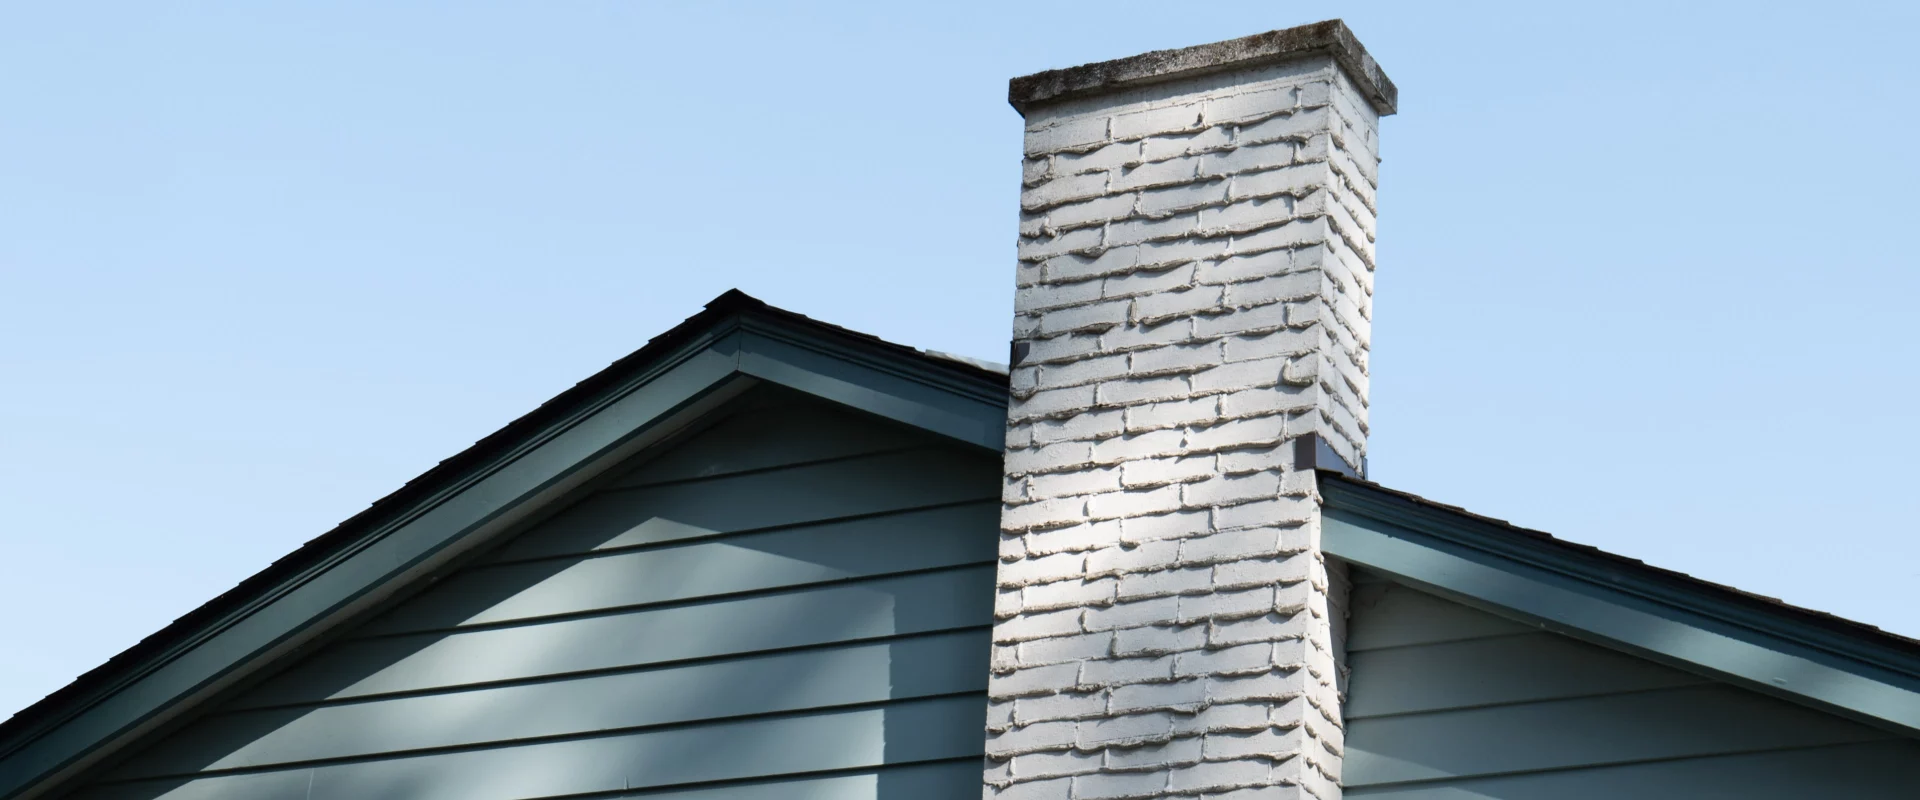 greyish blue house with a white brick chimney